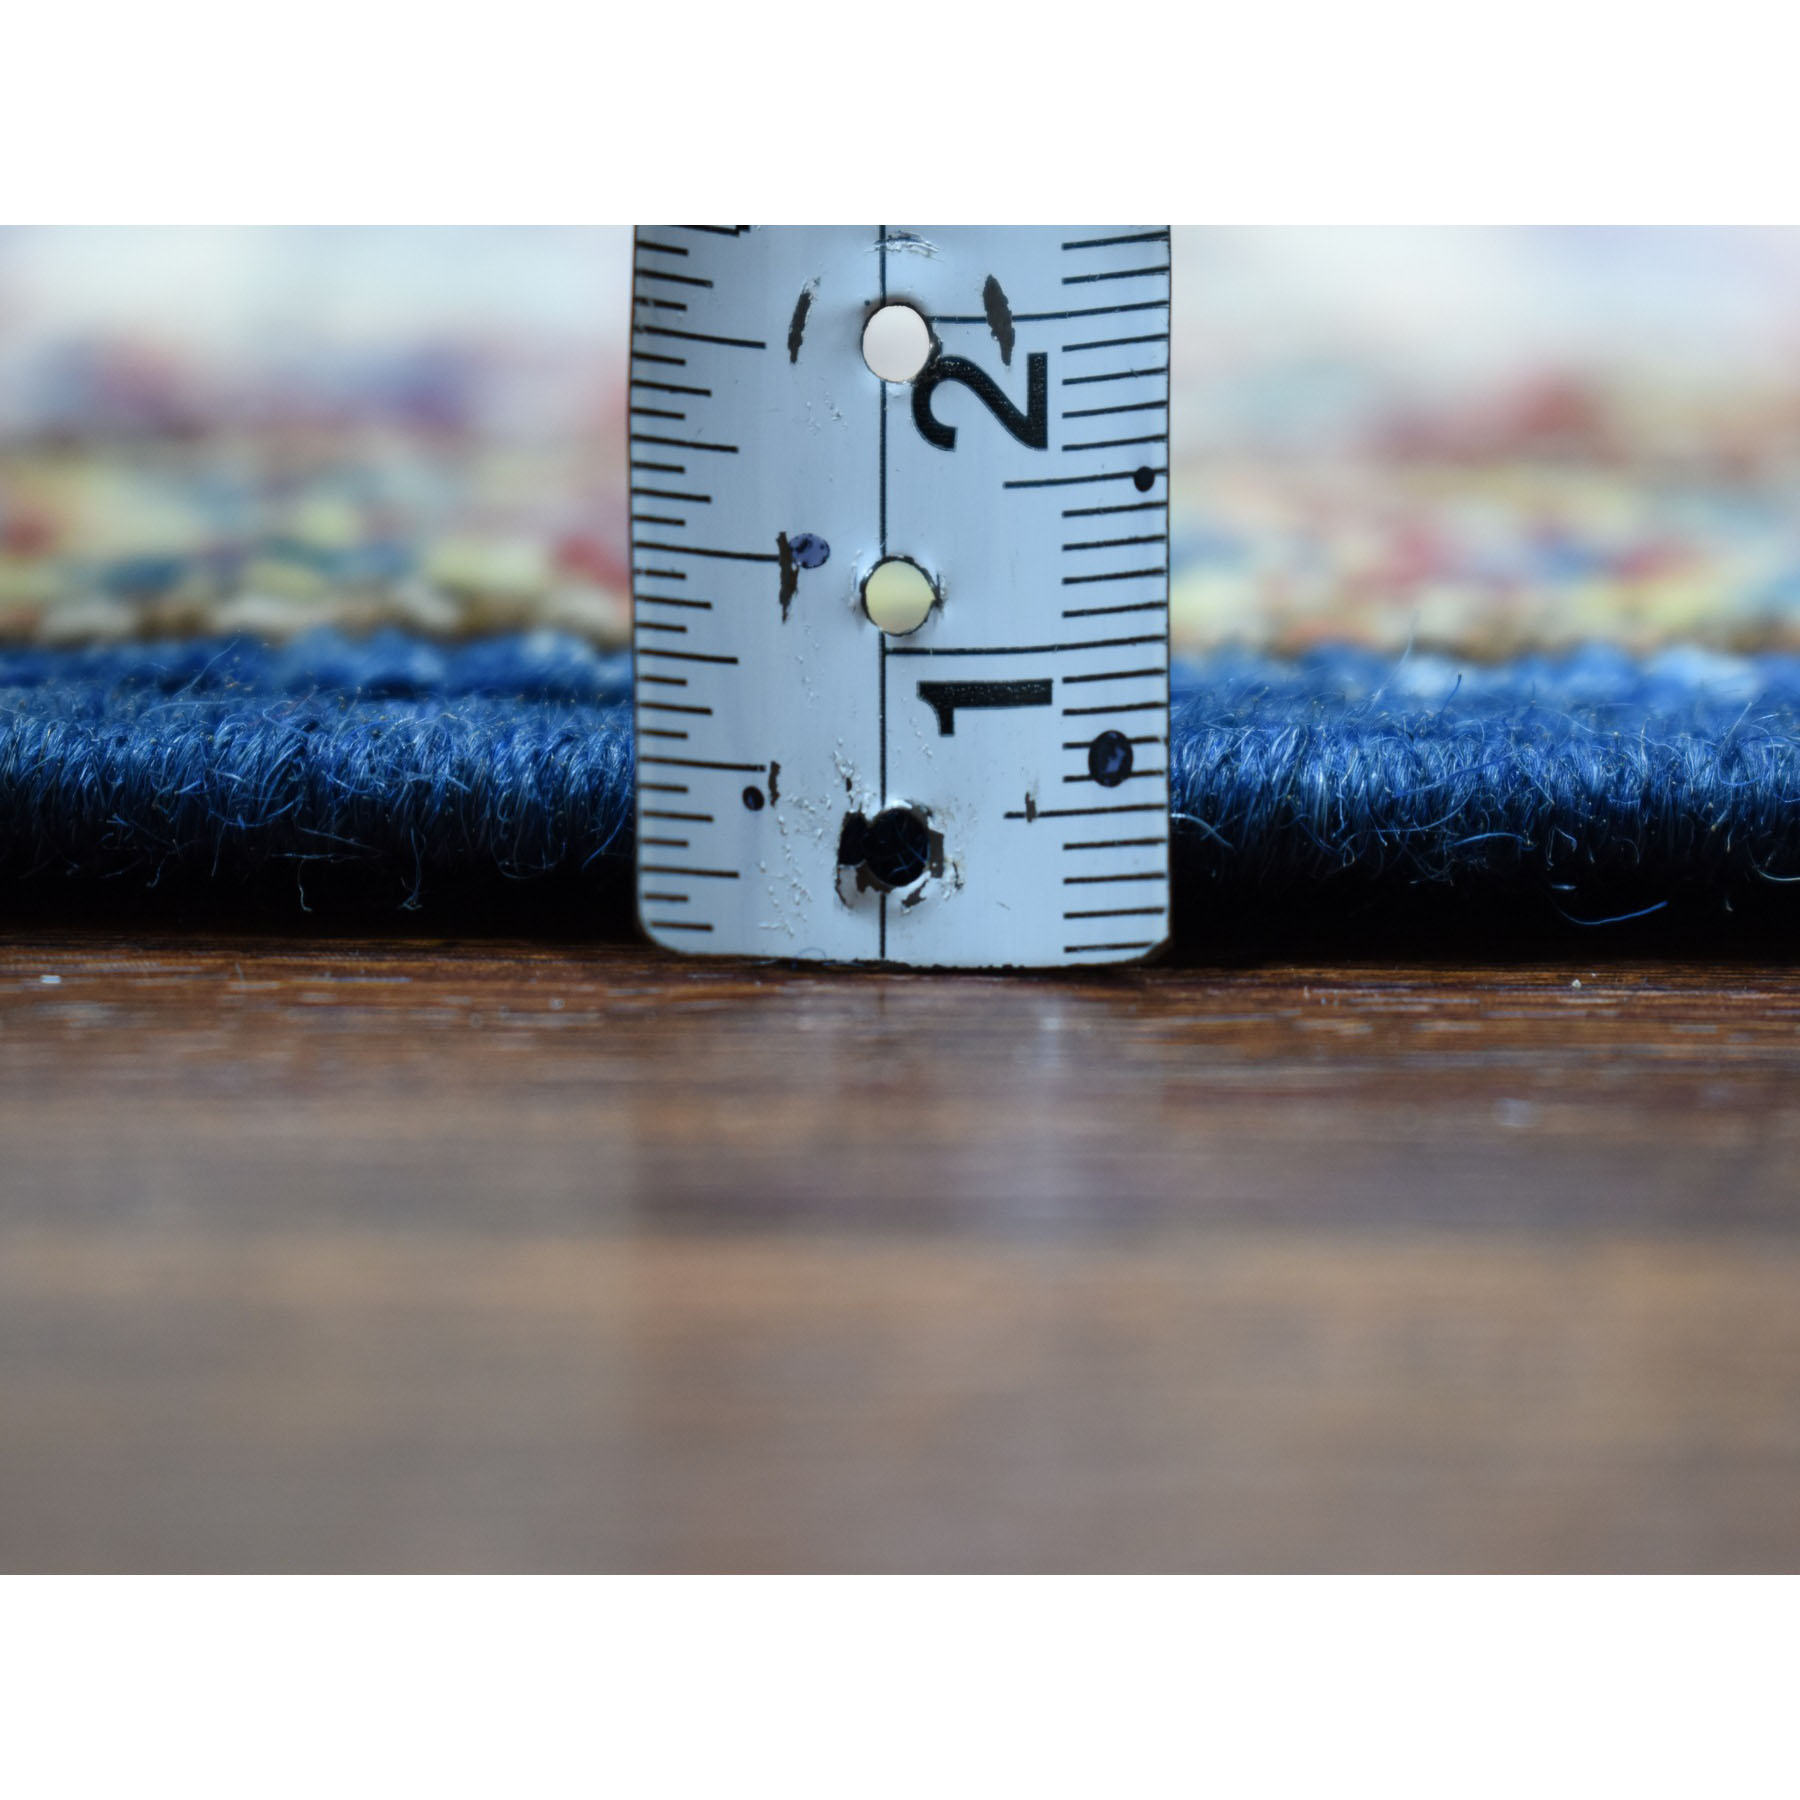 3-x4- Blue Super Kazak Pure Wool Geometric Design Hand-Knotted Oriental Rug 